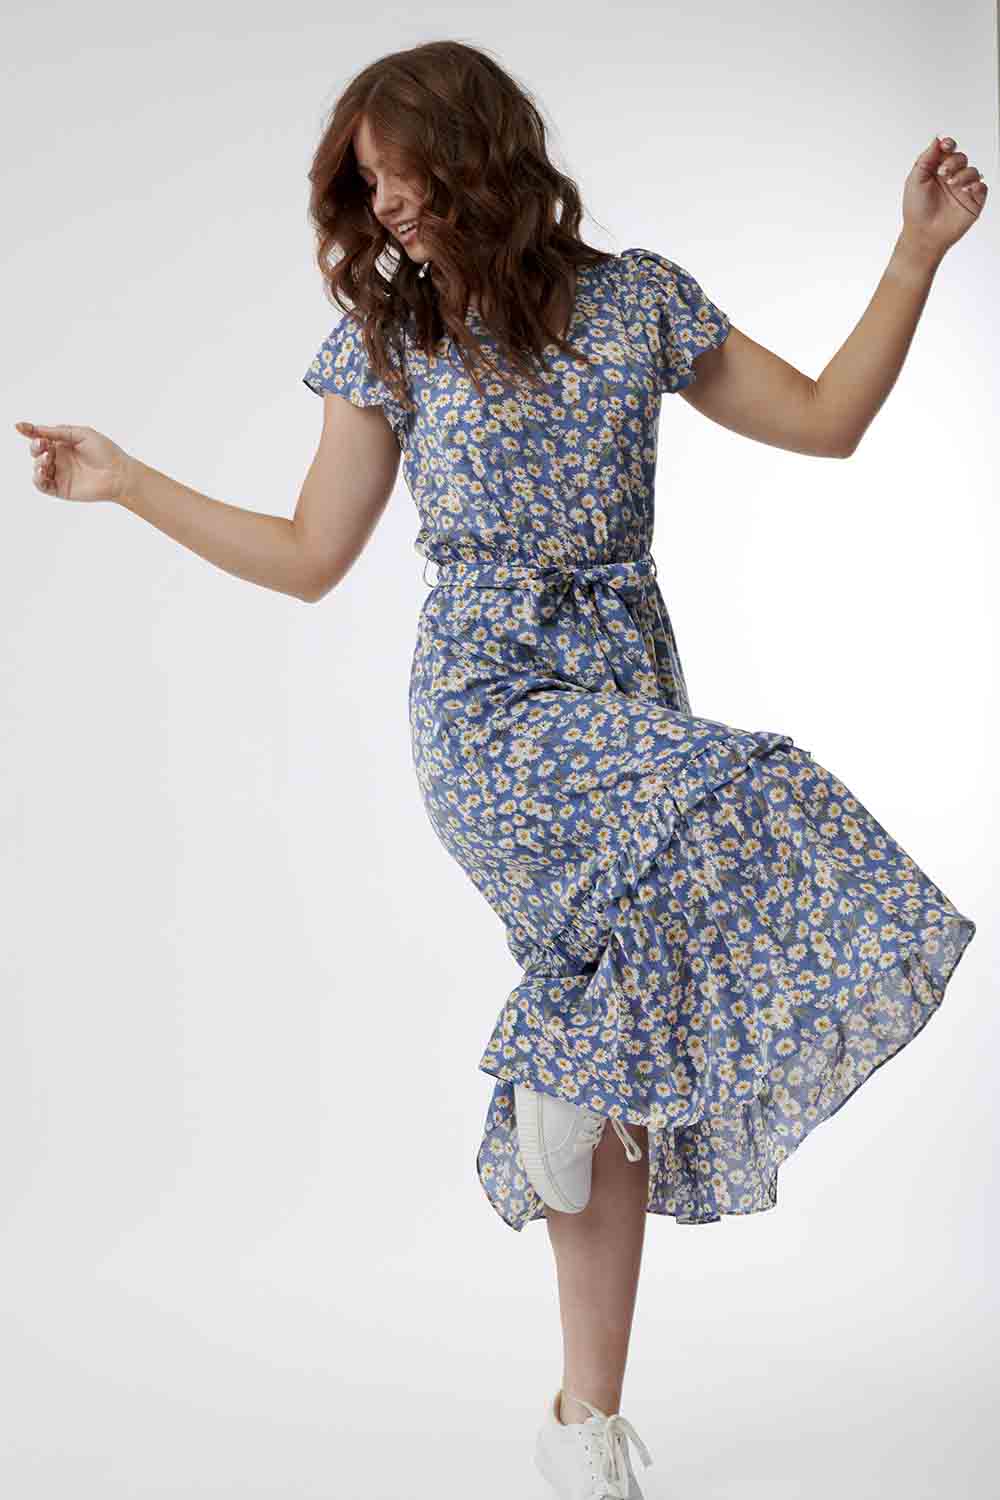 Follow the Summer Floral Midi Dress